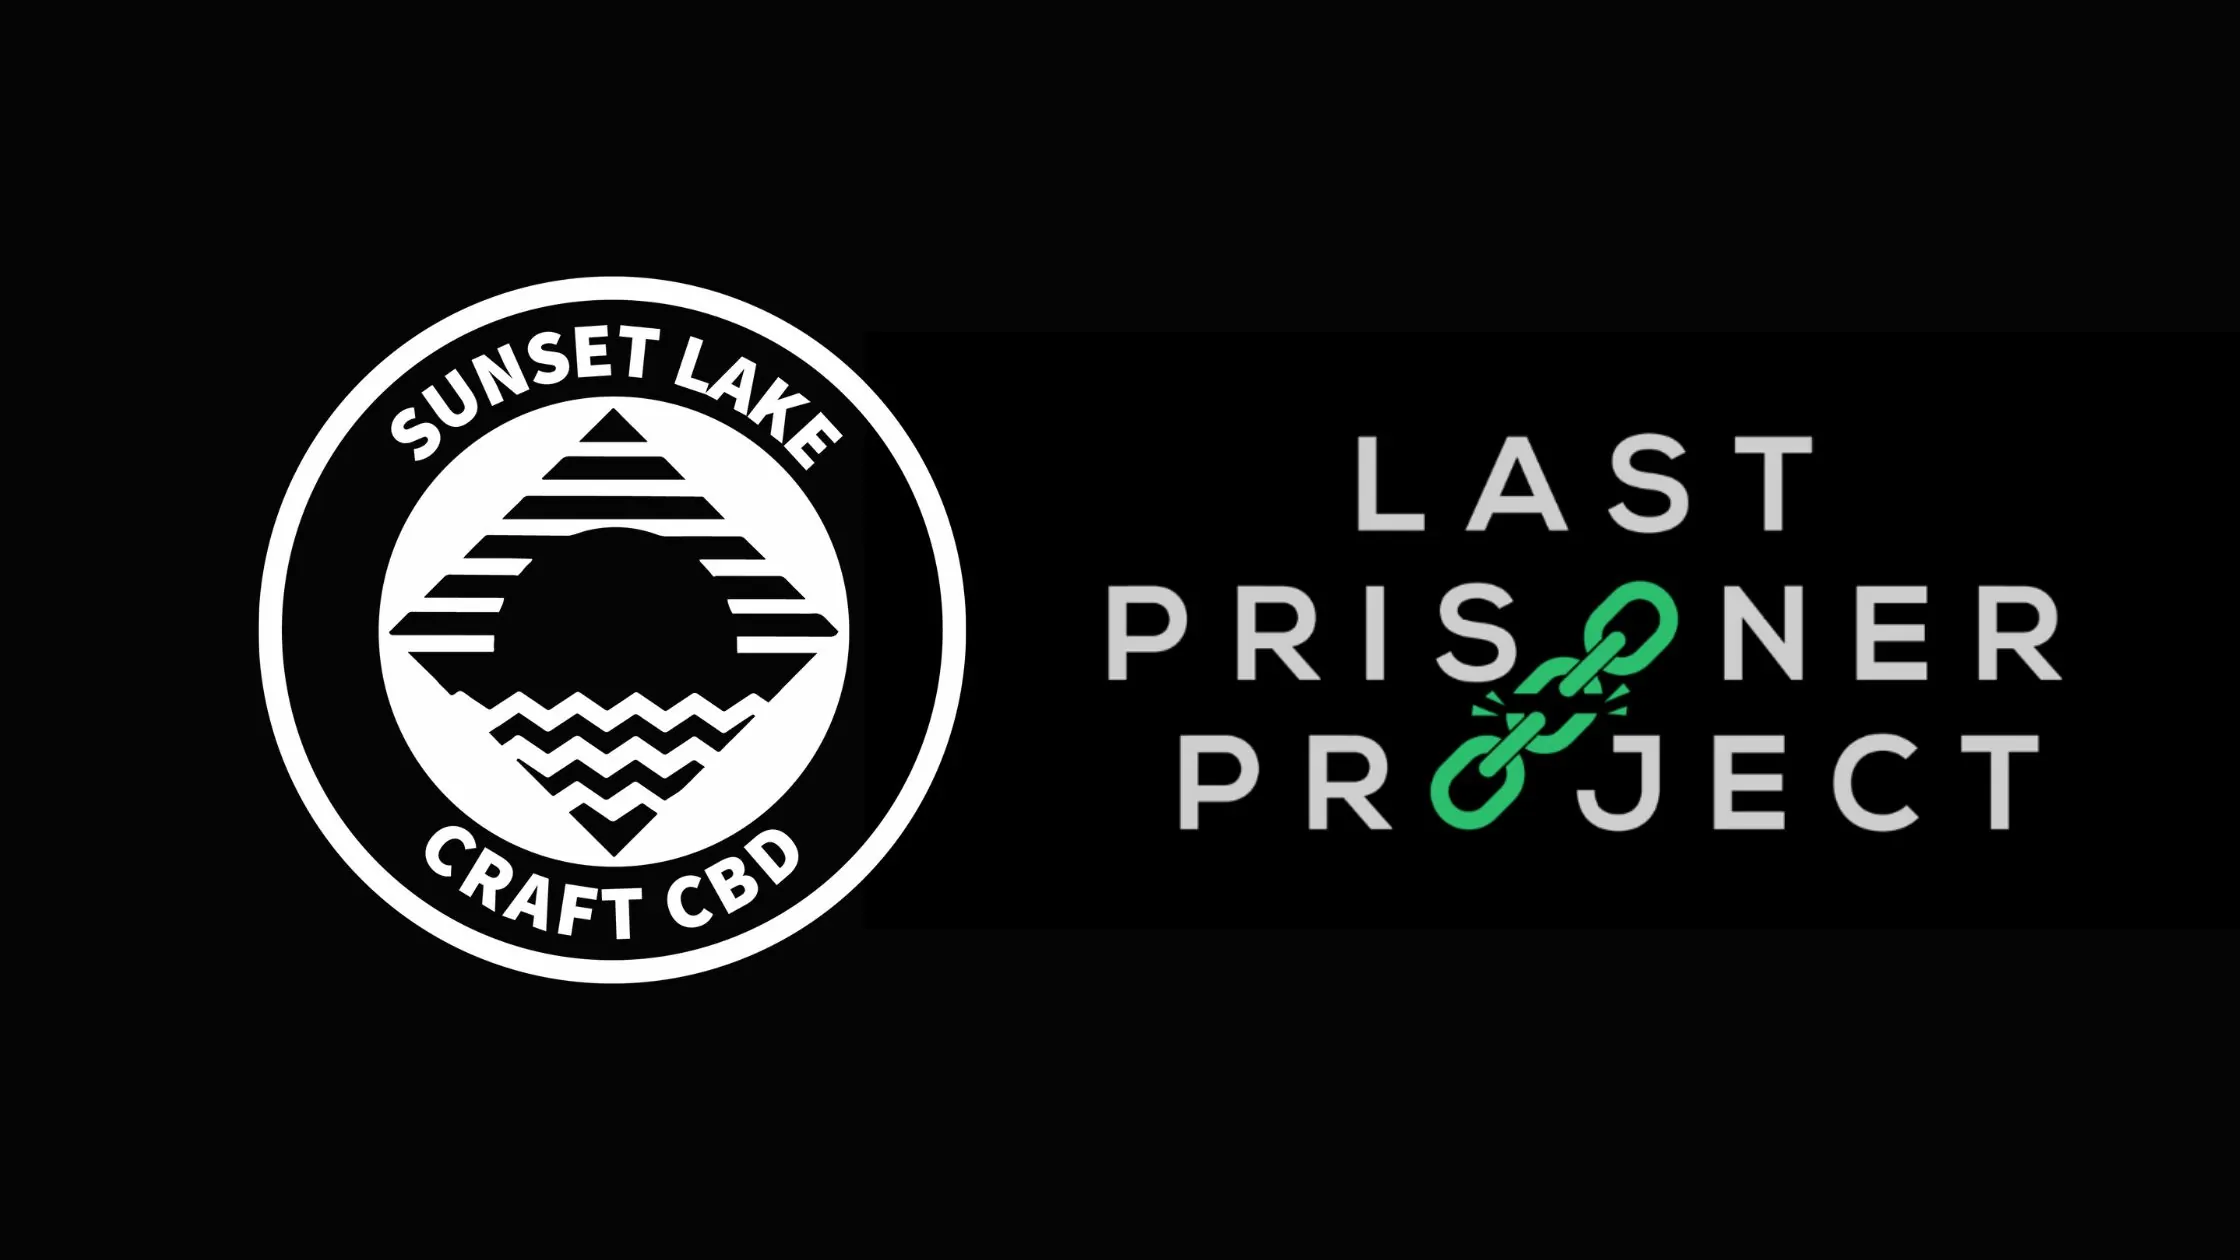 How Hemp Can Help: Last Prisoner Project